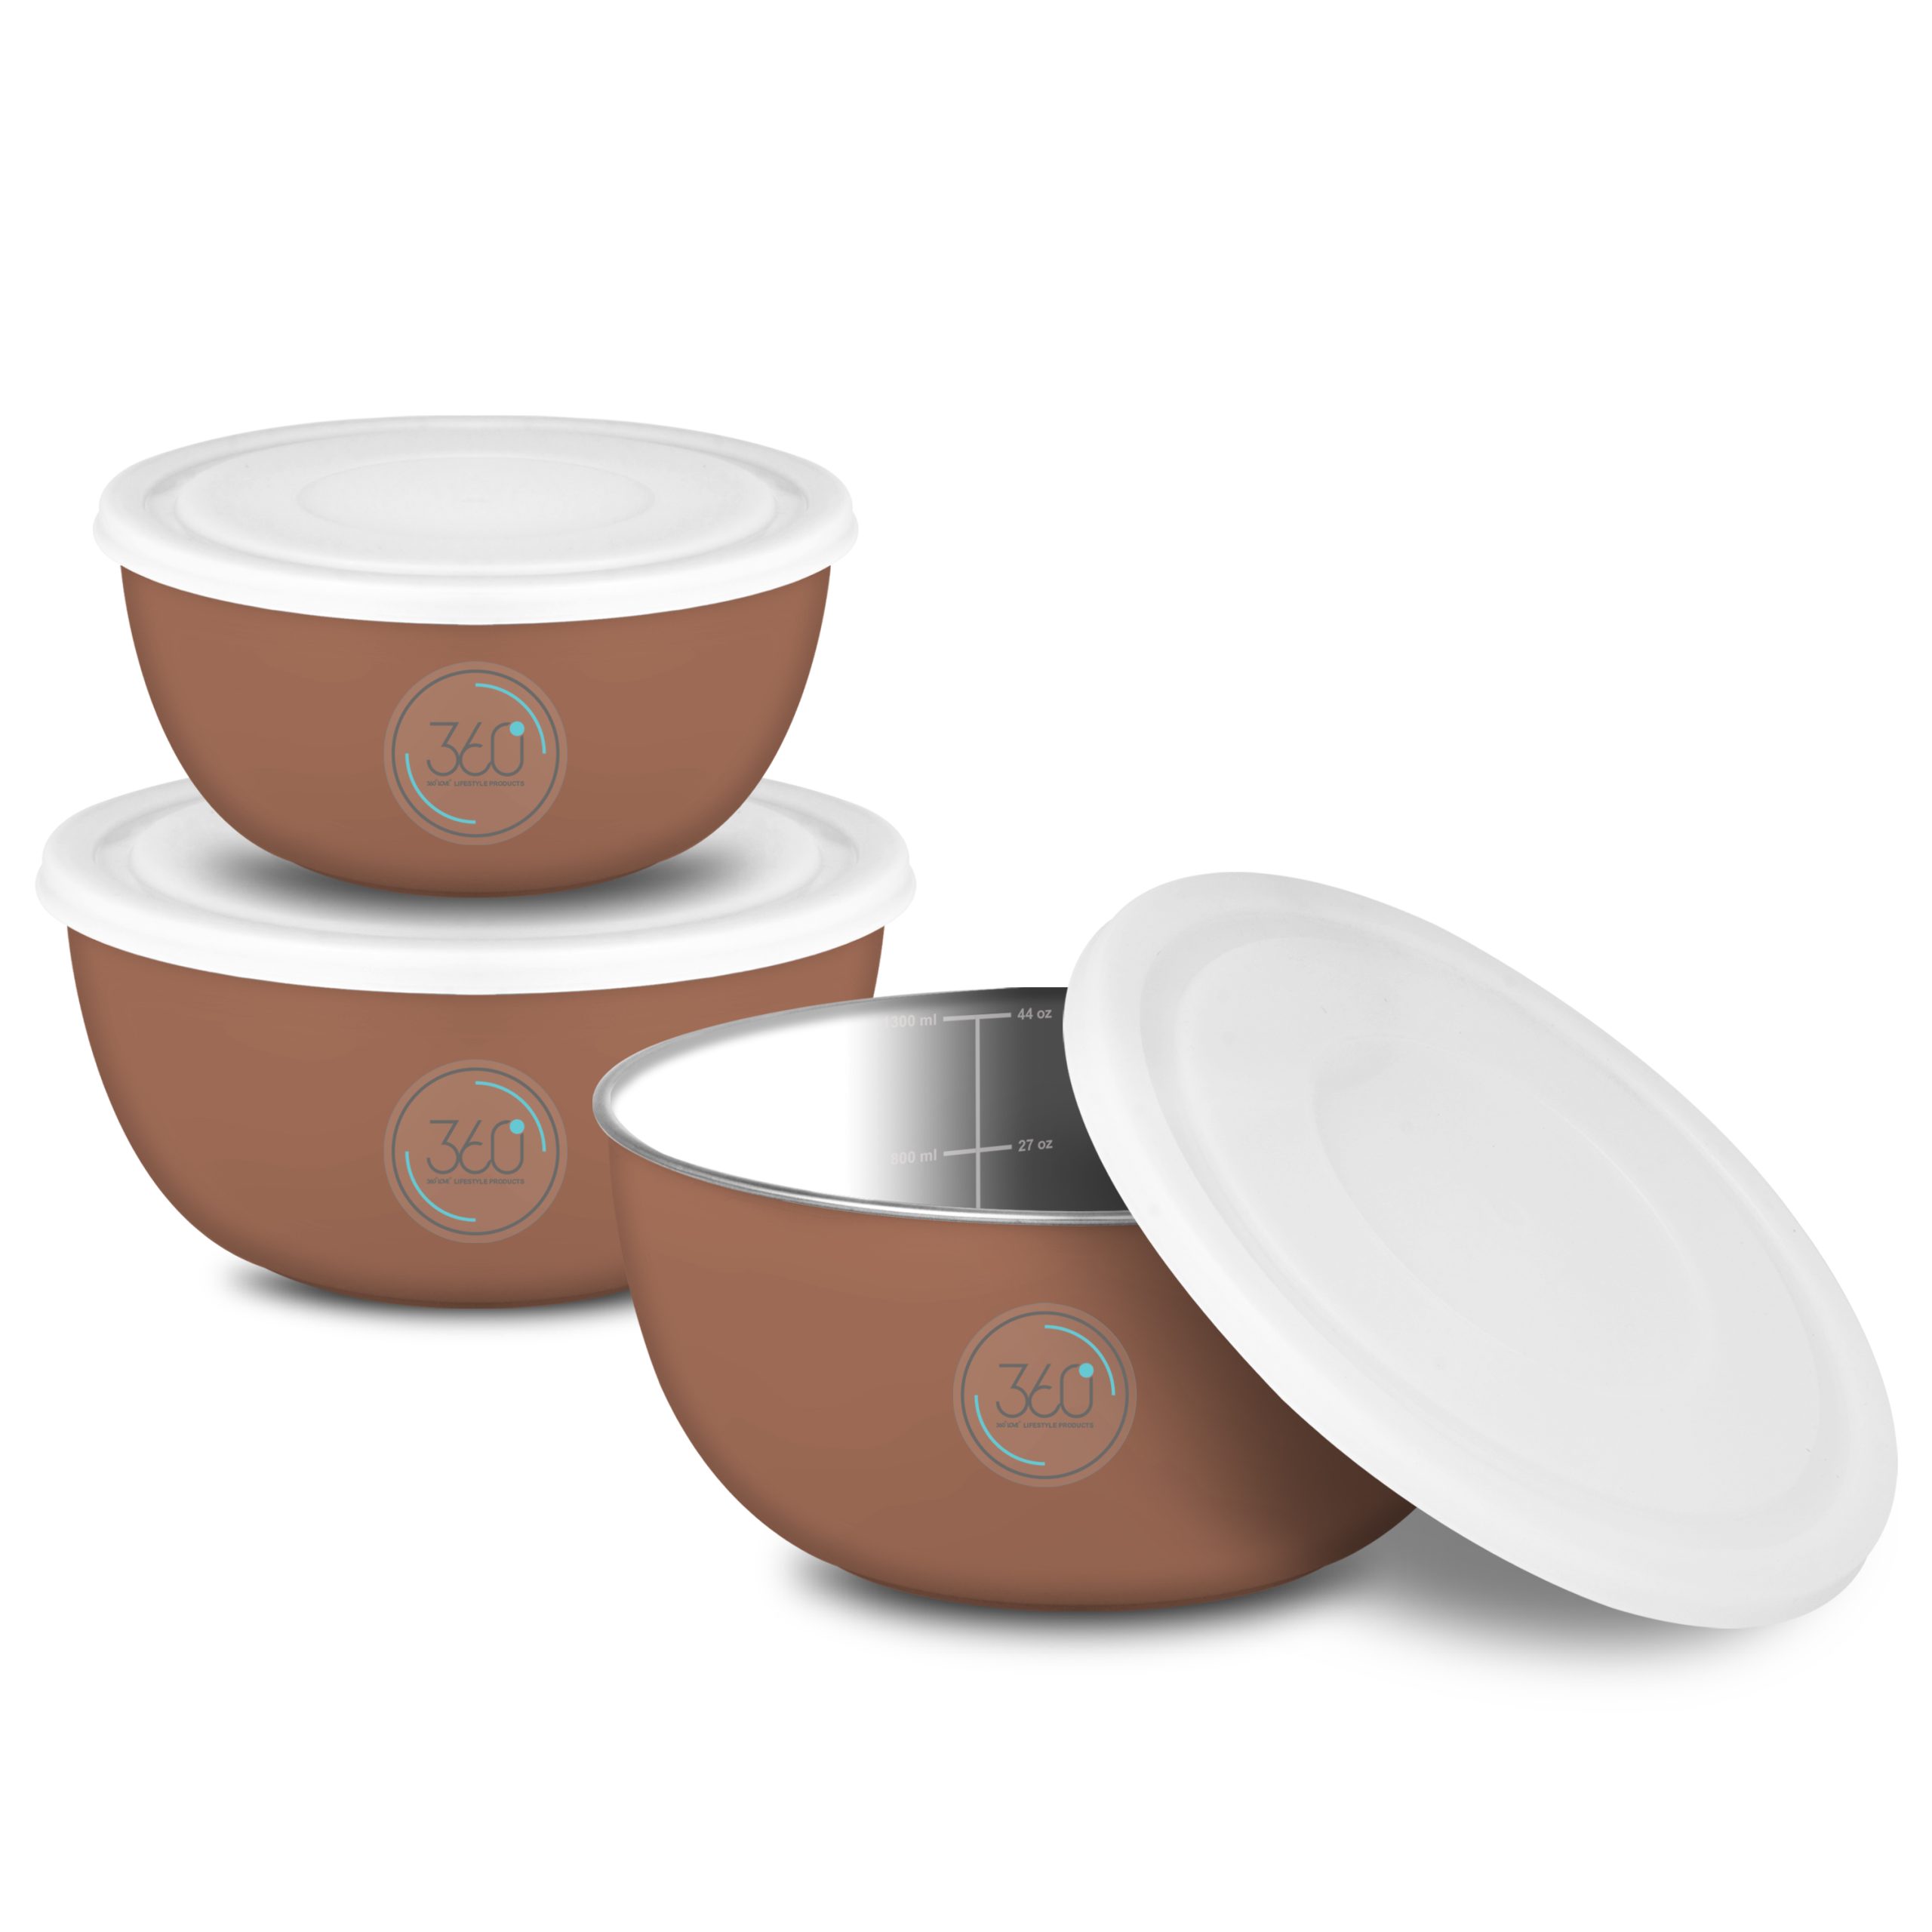 Micro Cocoa Bowl Set of 3